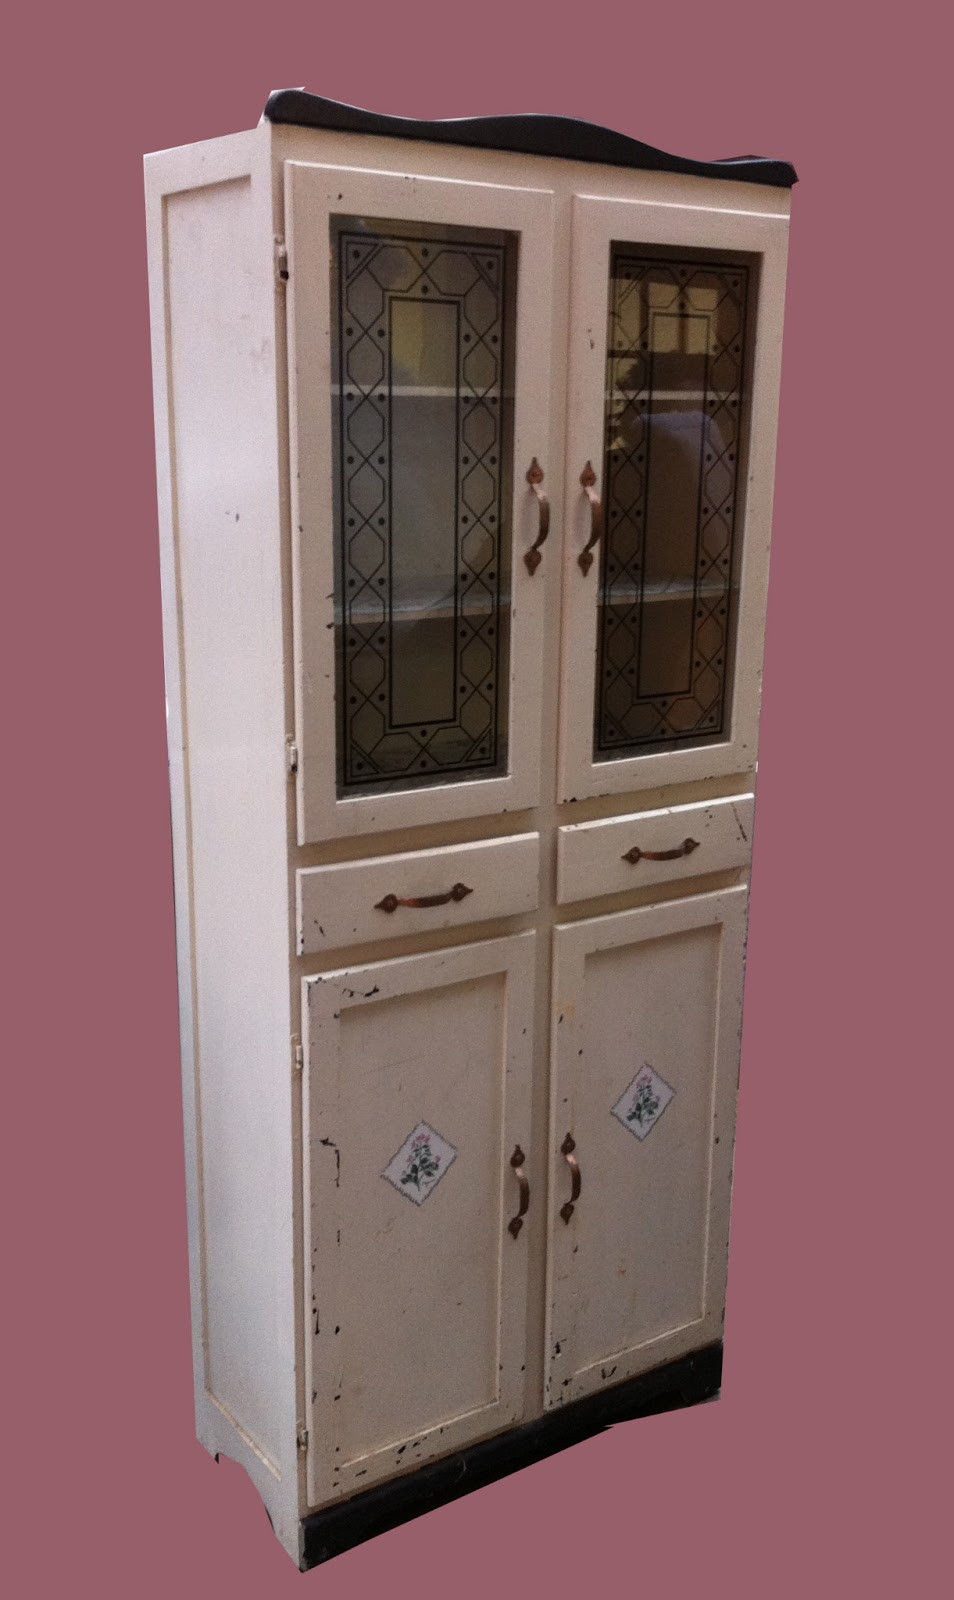 Freestanding Kitchen Cabinets
 Uhuru Furniture & Collectibles Vintage Freestanding